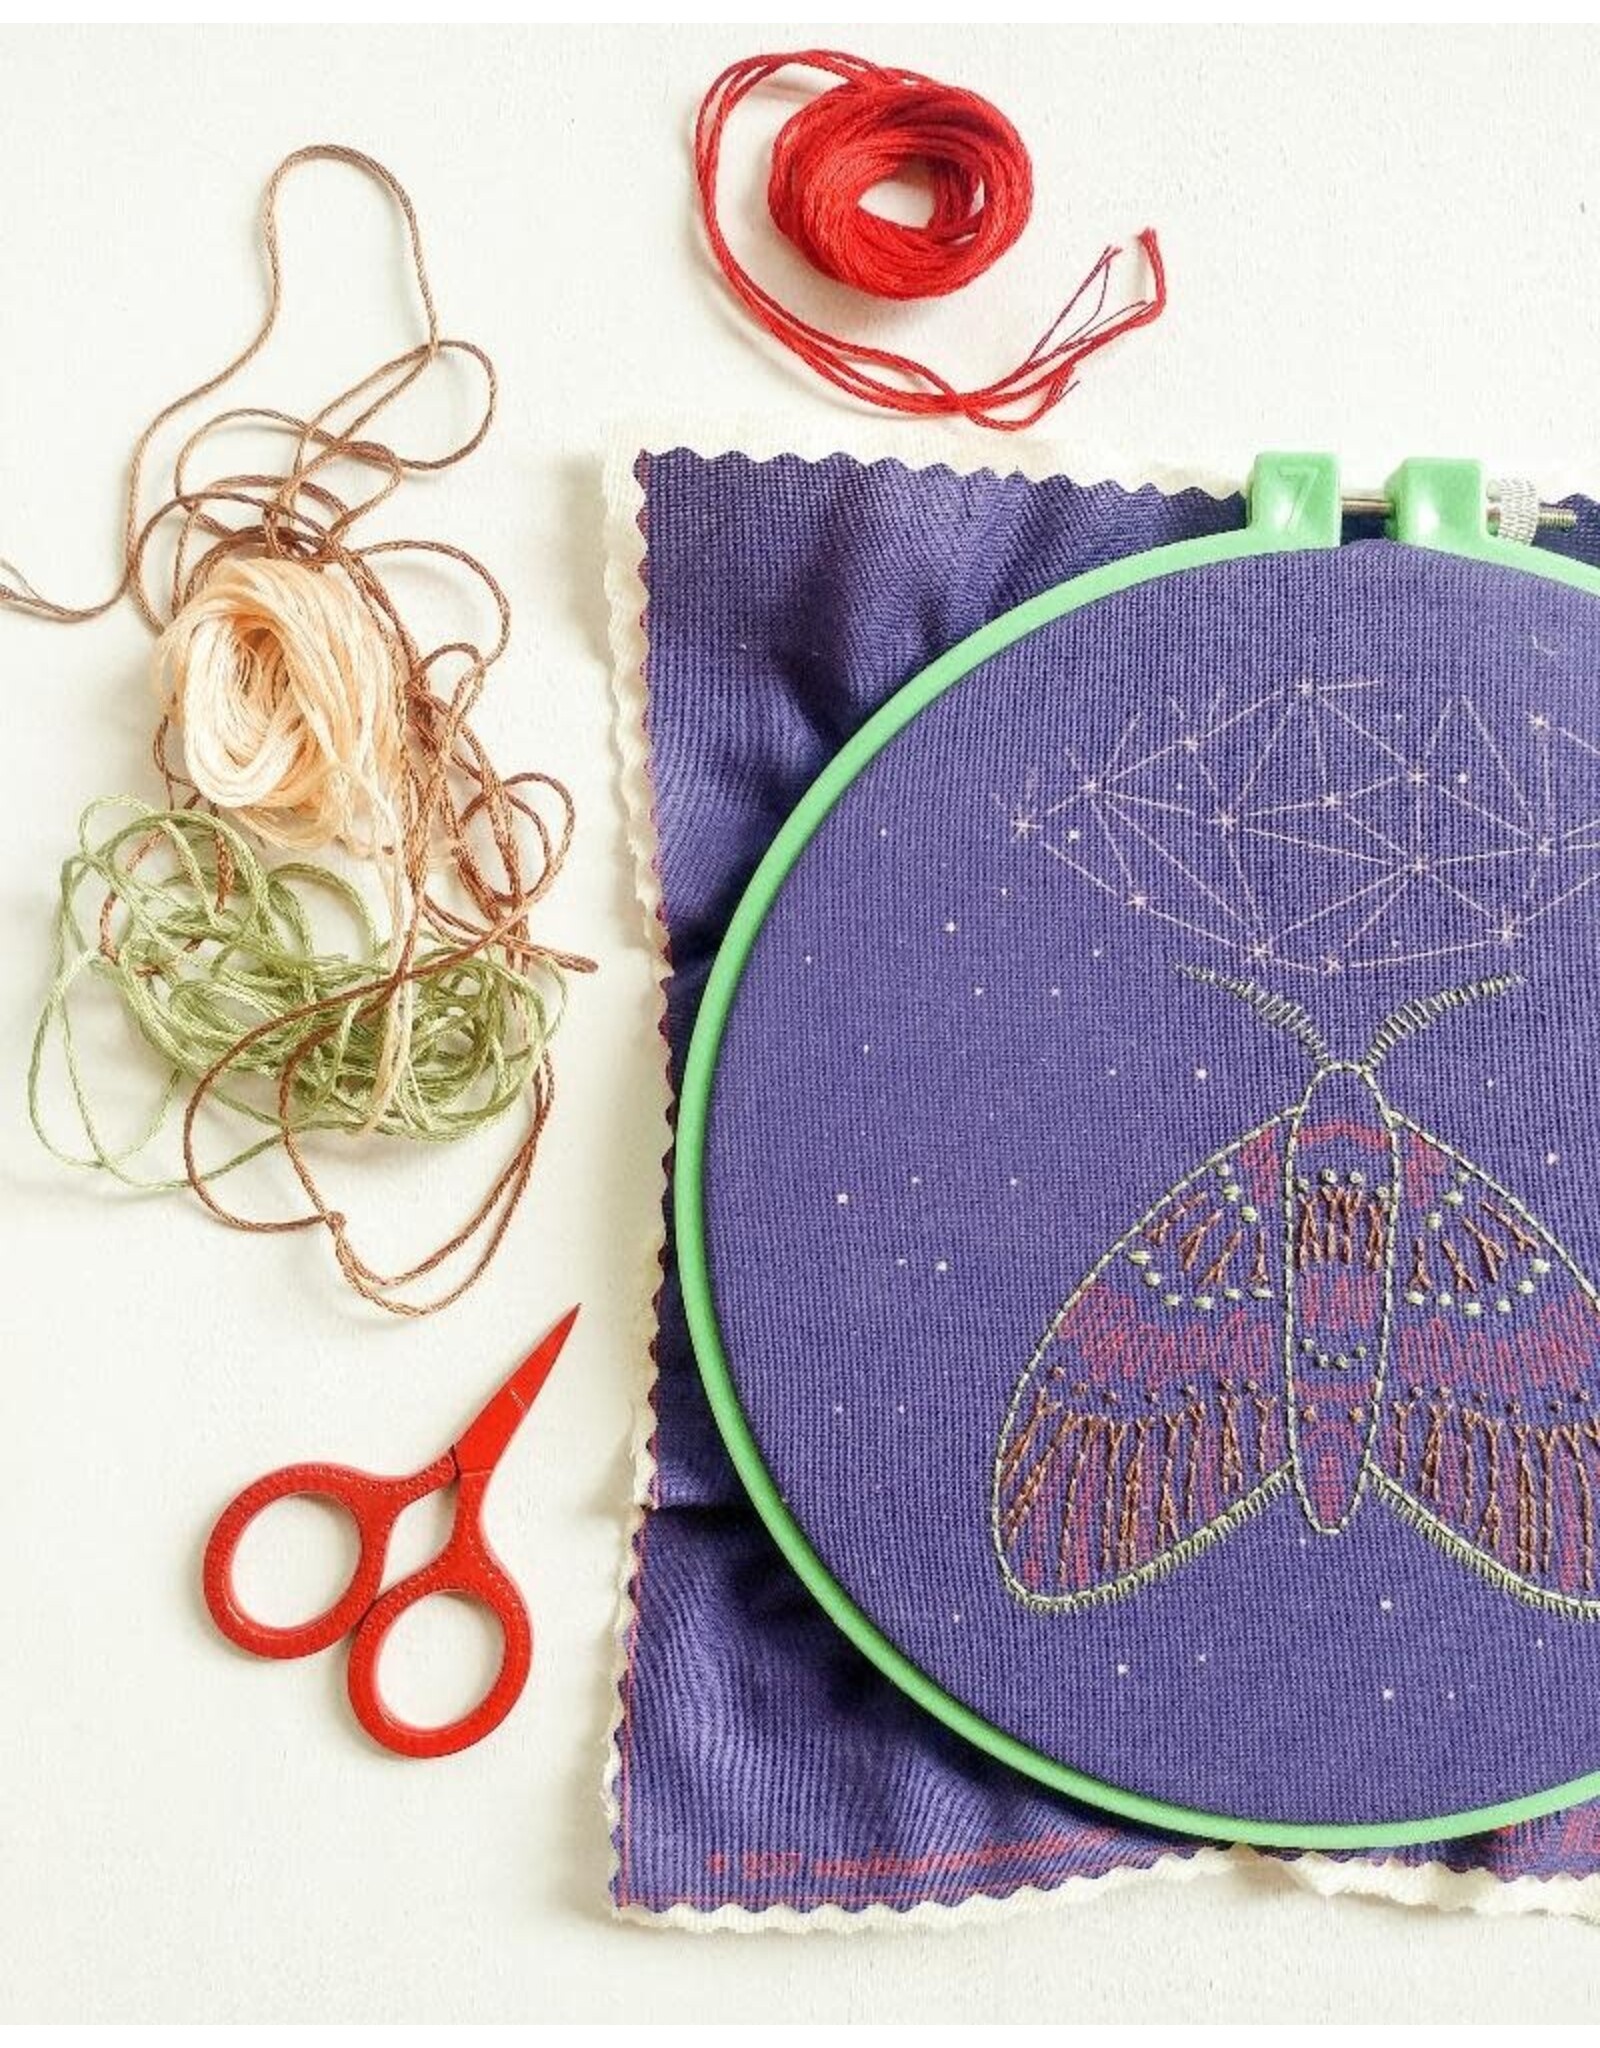 cozyblue Midnight Flight Embroidery Kit from cozyblue